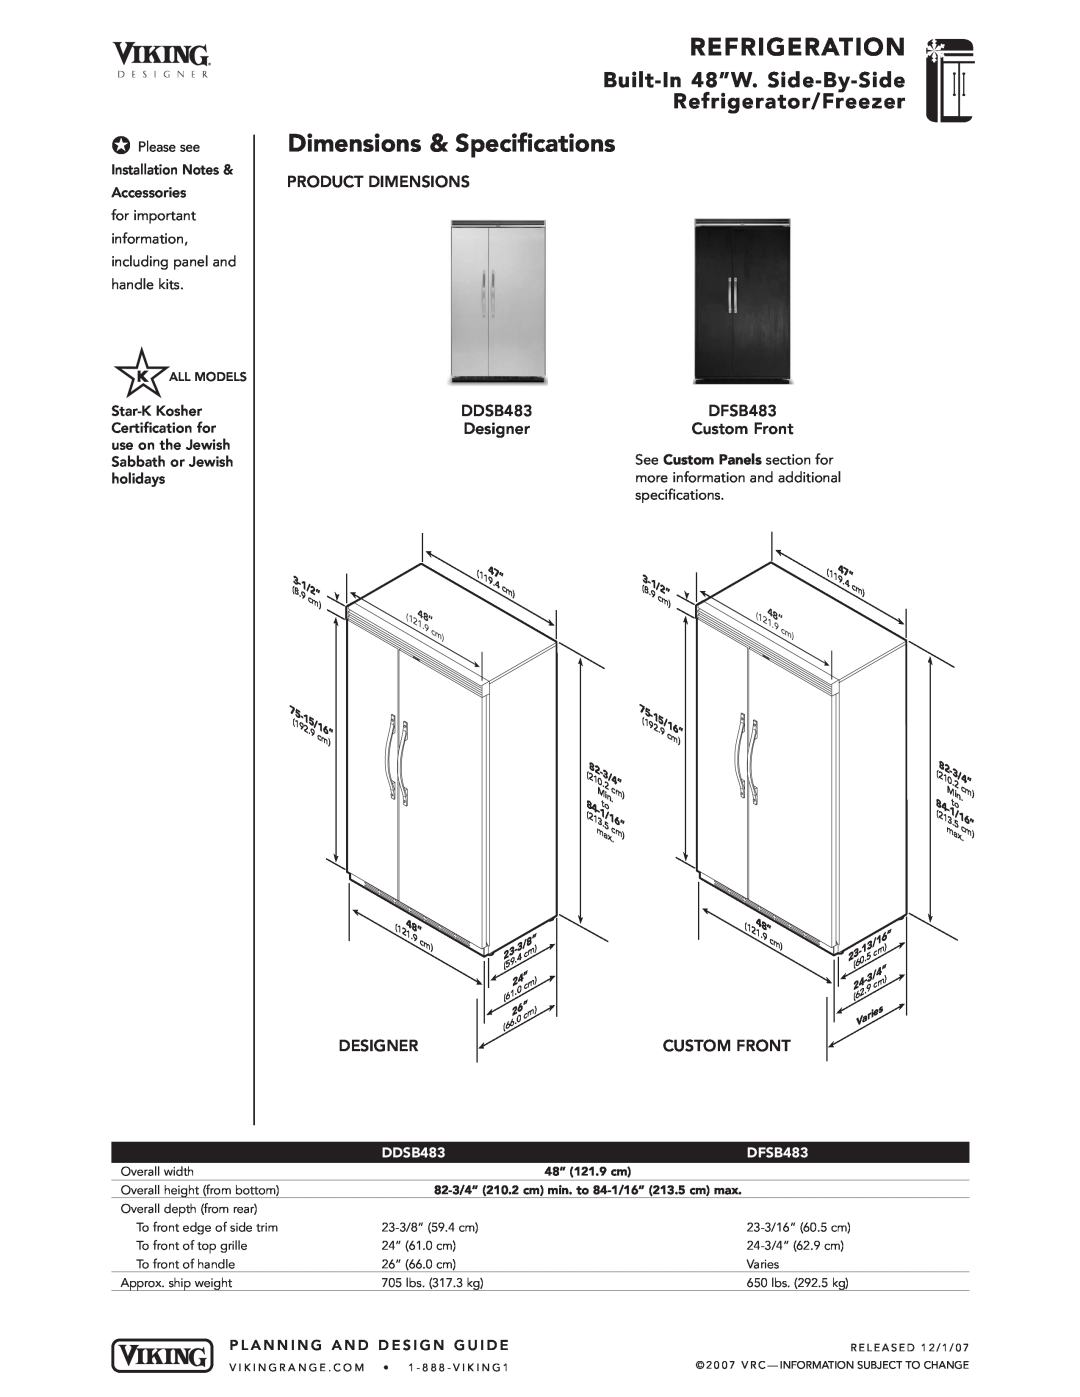 Viking Product Dimensions, DDSB483 Designer, DFSB483 Custom Front, Refrigeration, Dimensions & Specifications, 2.15/1 